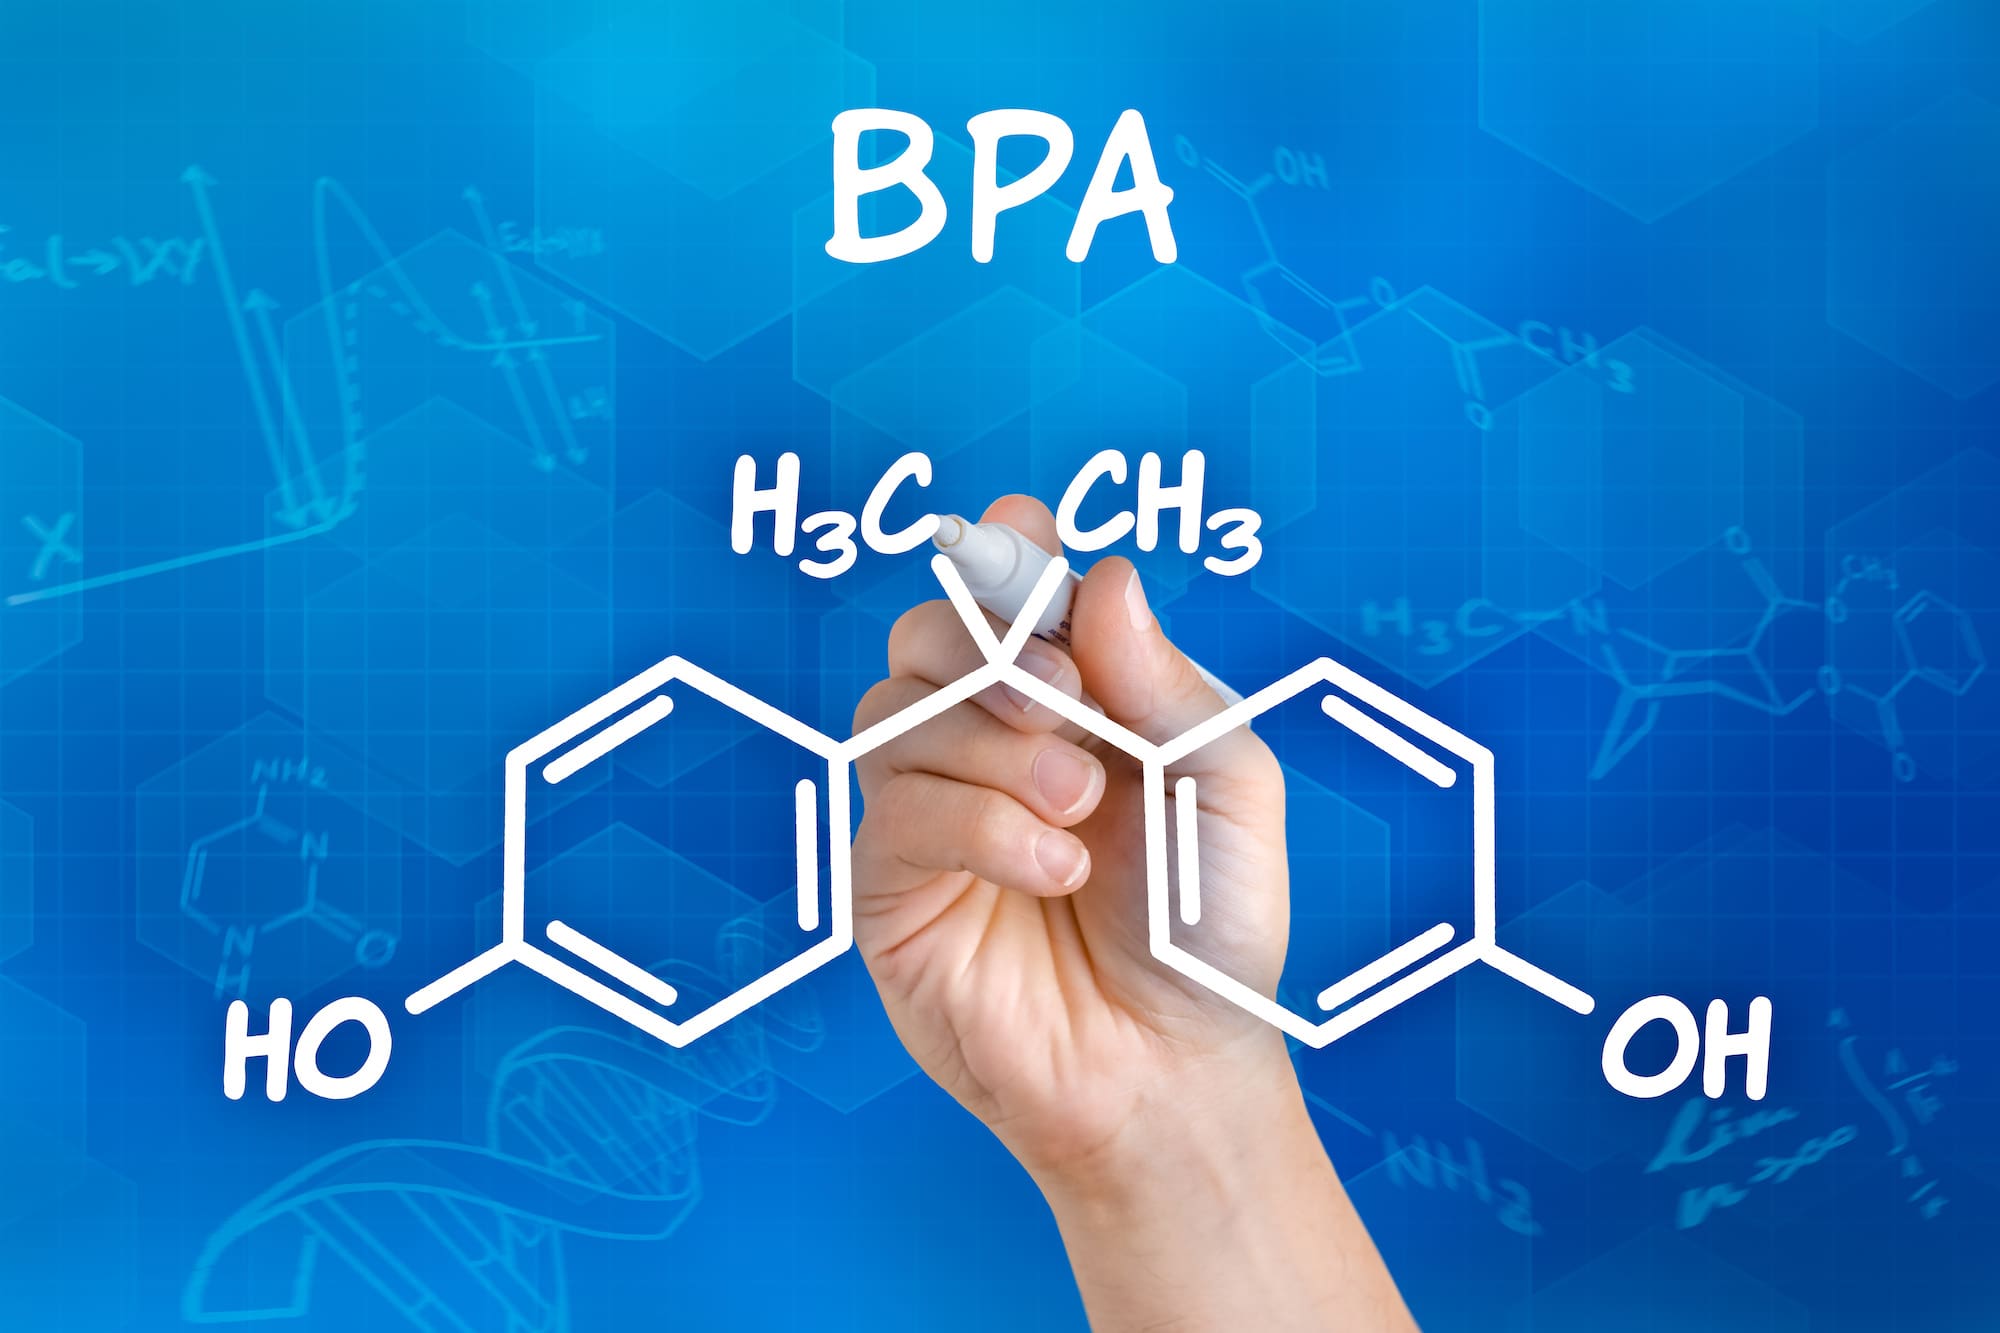 EU Court Confirms BPA an SVHC